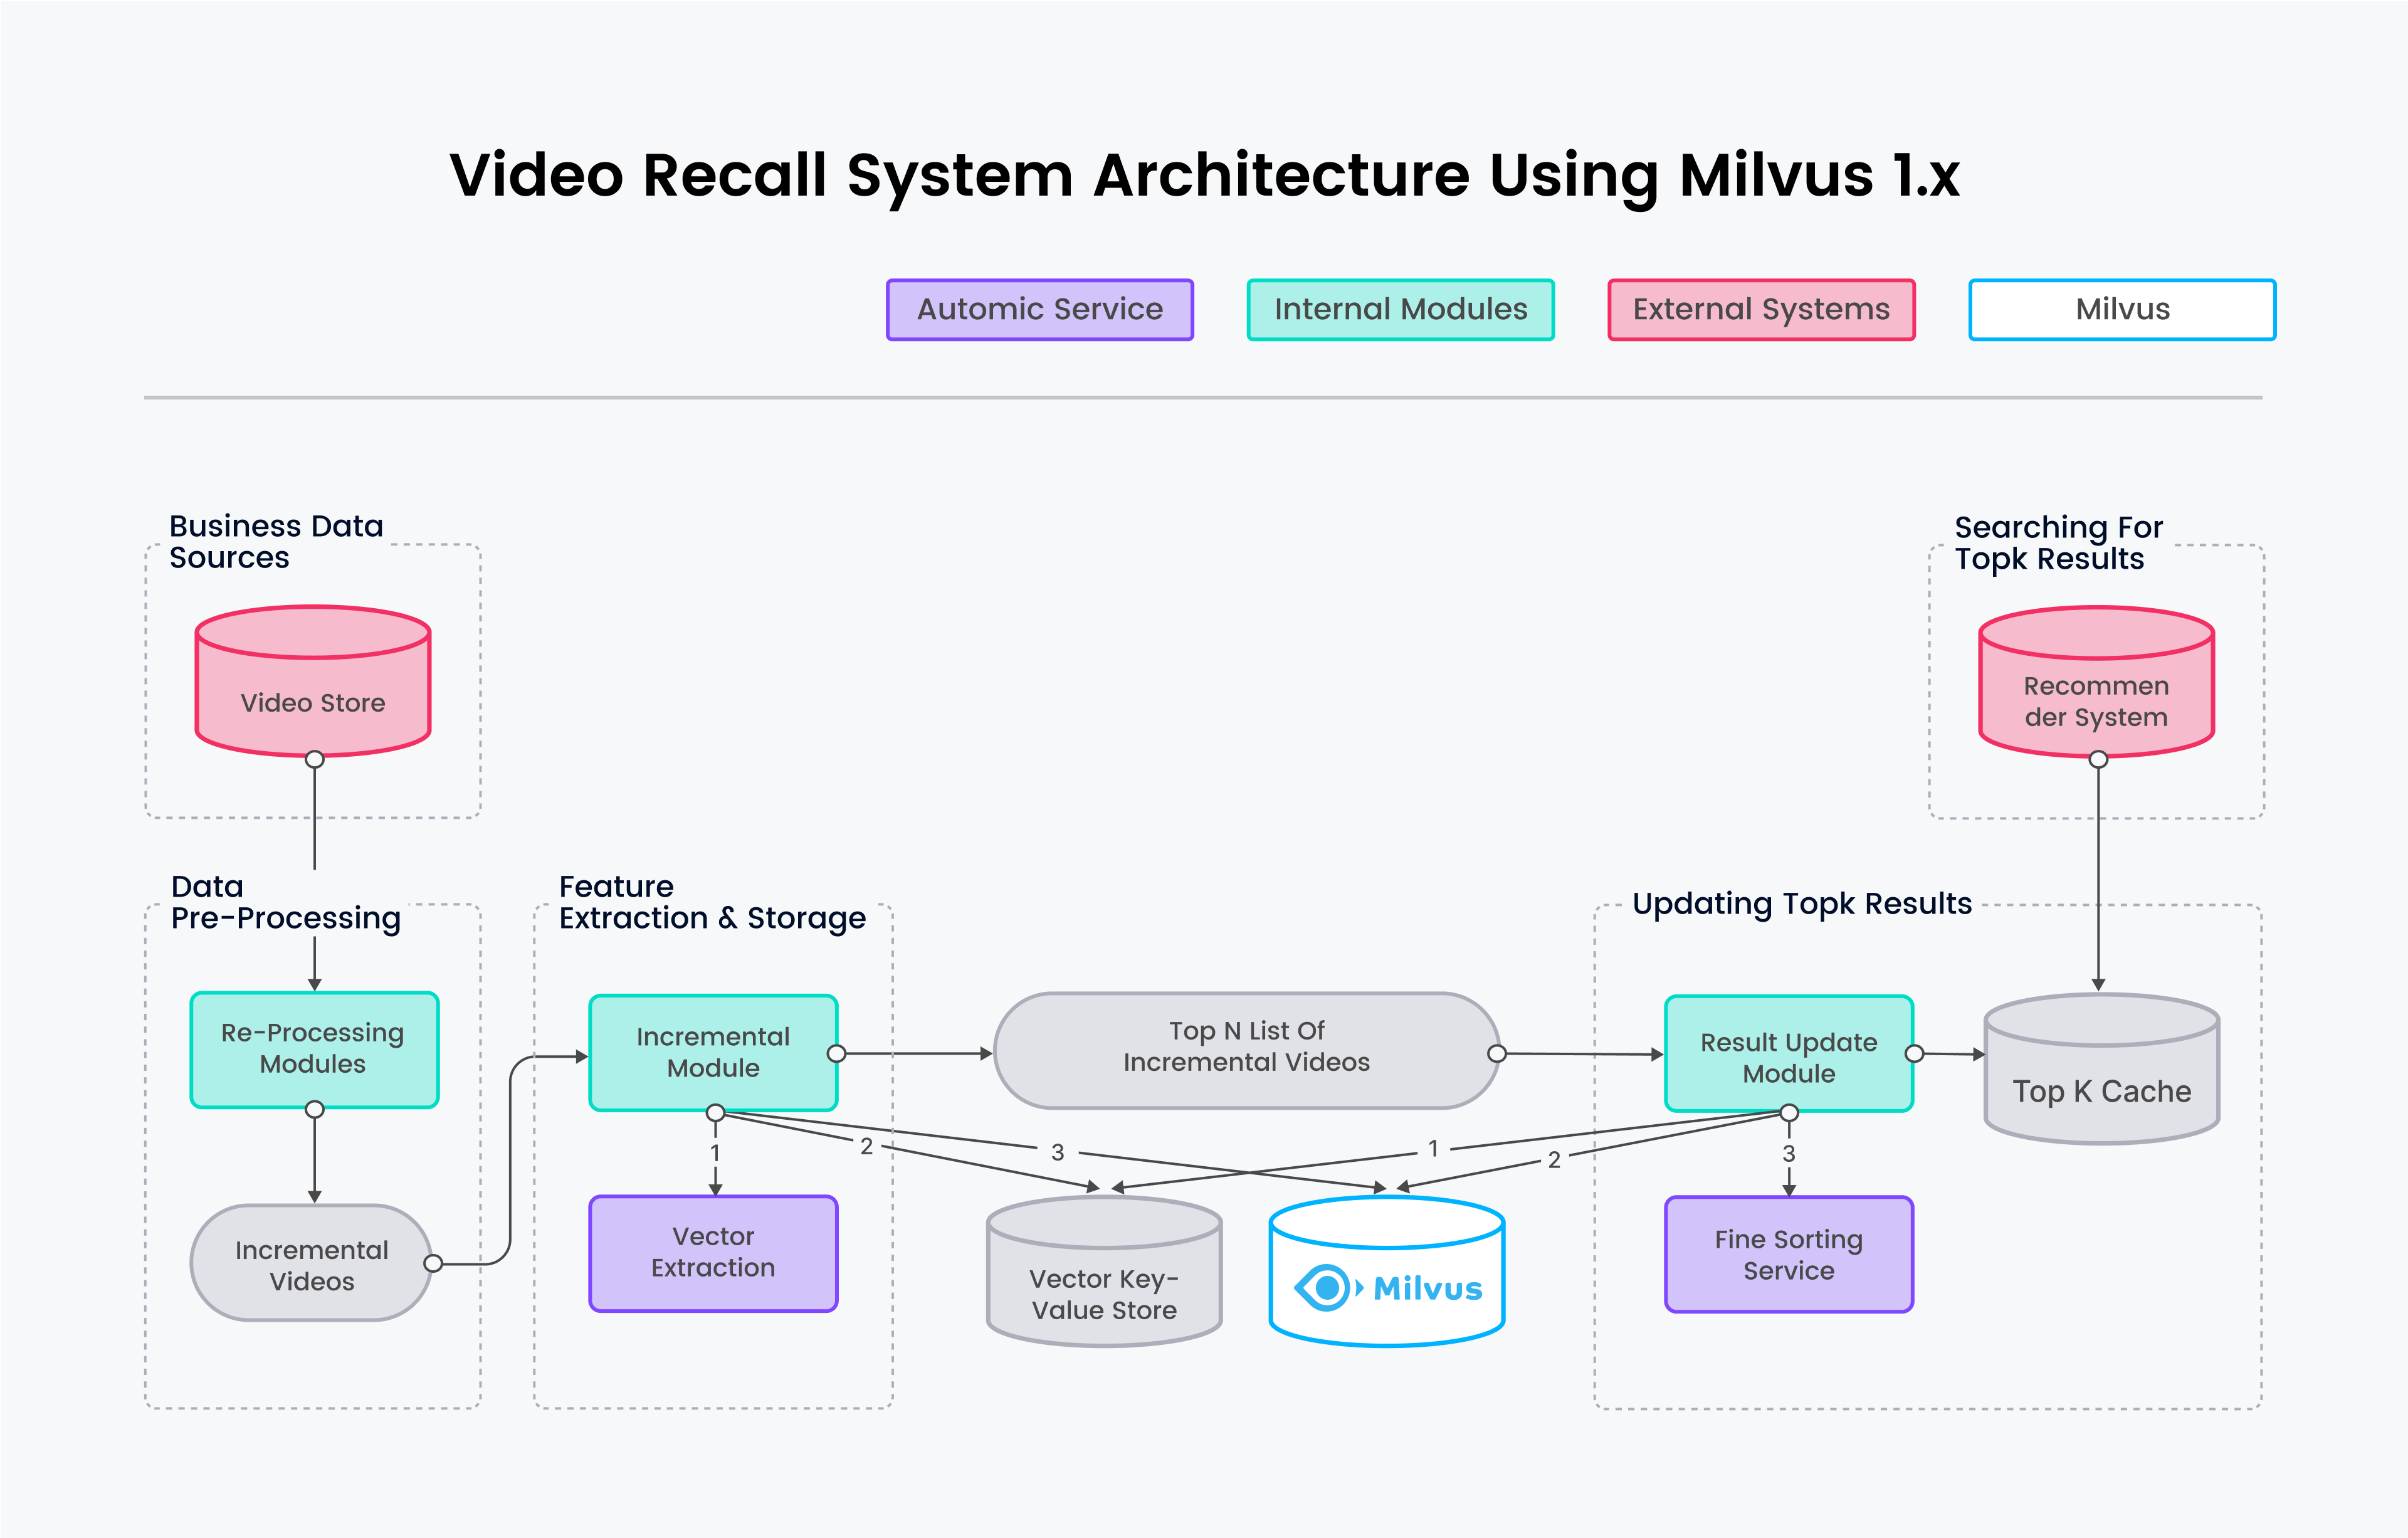 Video Recall System Architecture Using Milvus 1.x